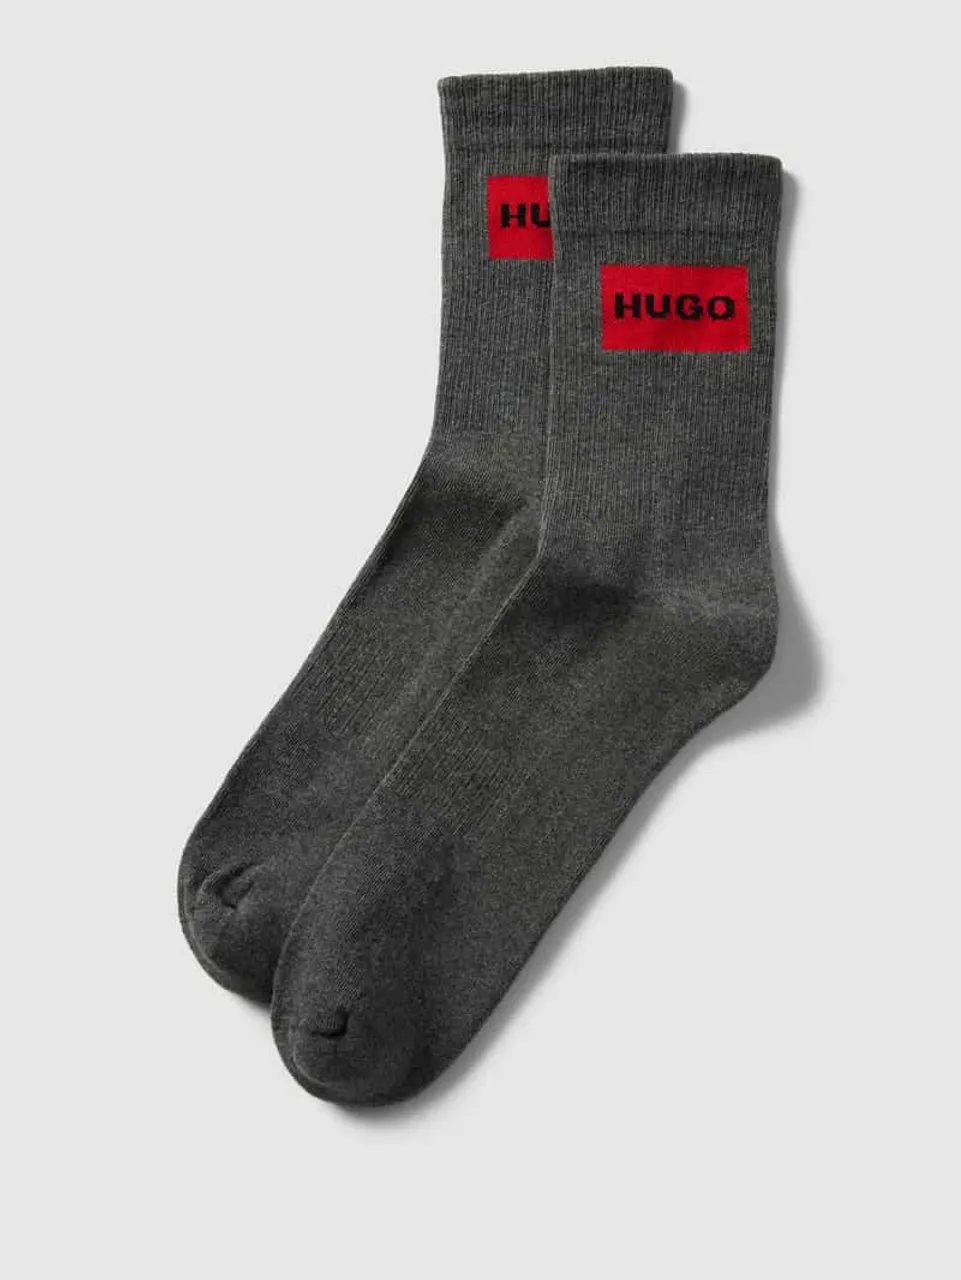 HUGO CLASSIFICATION Socken aus Baumwoll-Mix in melierter Optik im 2er-Pack in Mittelgrau